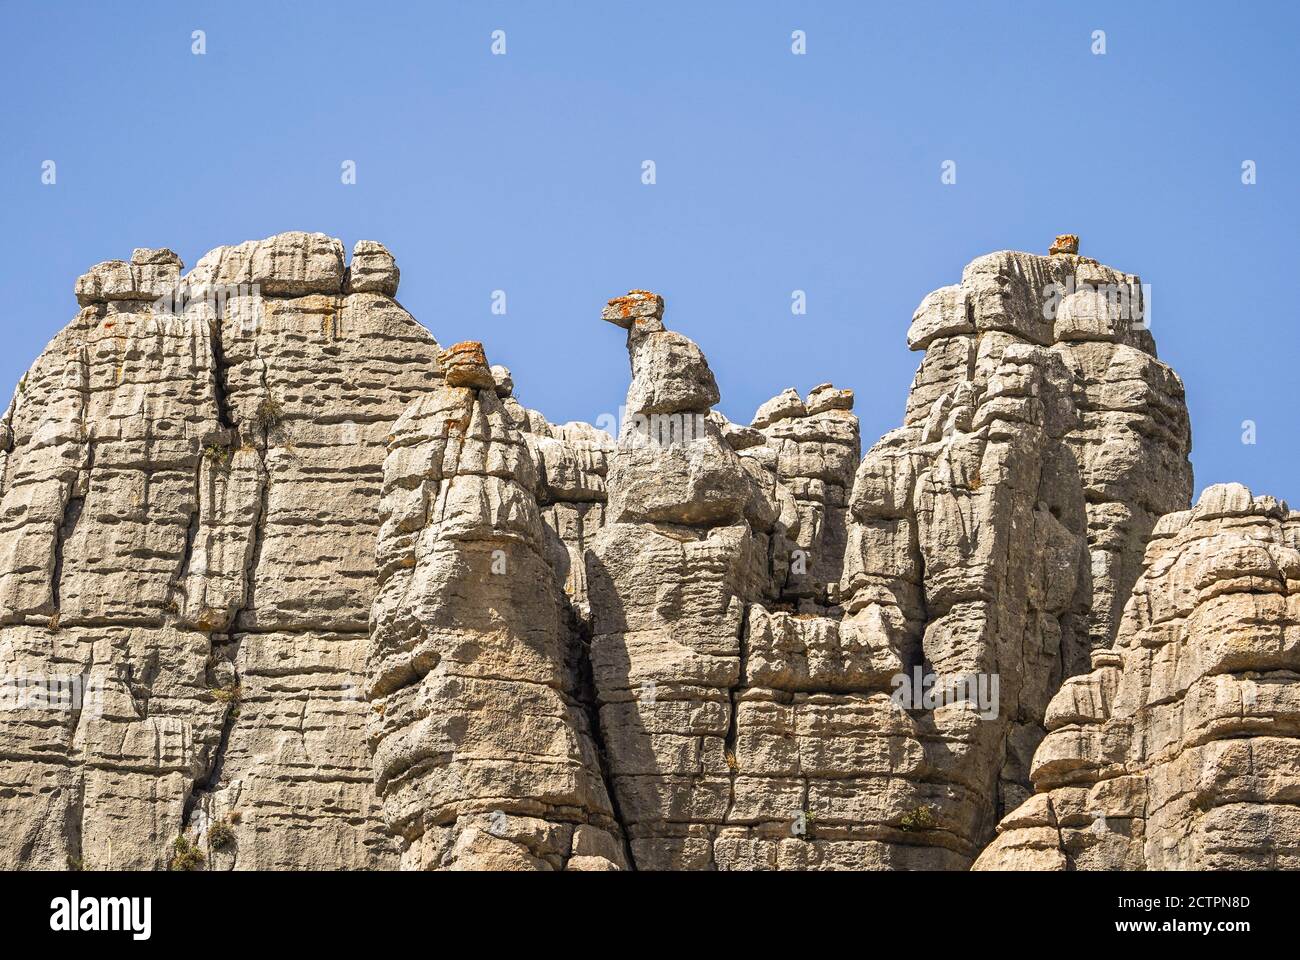 Torcal España, Antequera, reserva natural de montaña cárstica, con impresionantes paisajes cársticos y extrañas formaciones de piedra caliza, Andalucía. Foto de stock